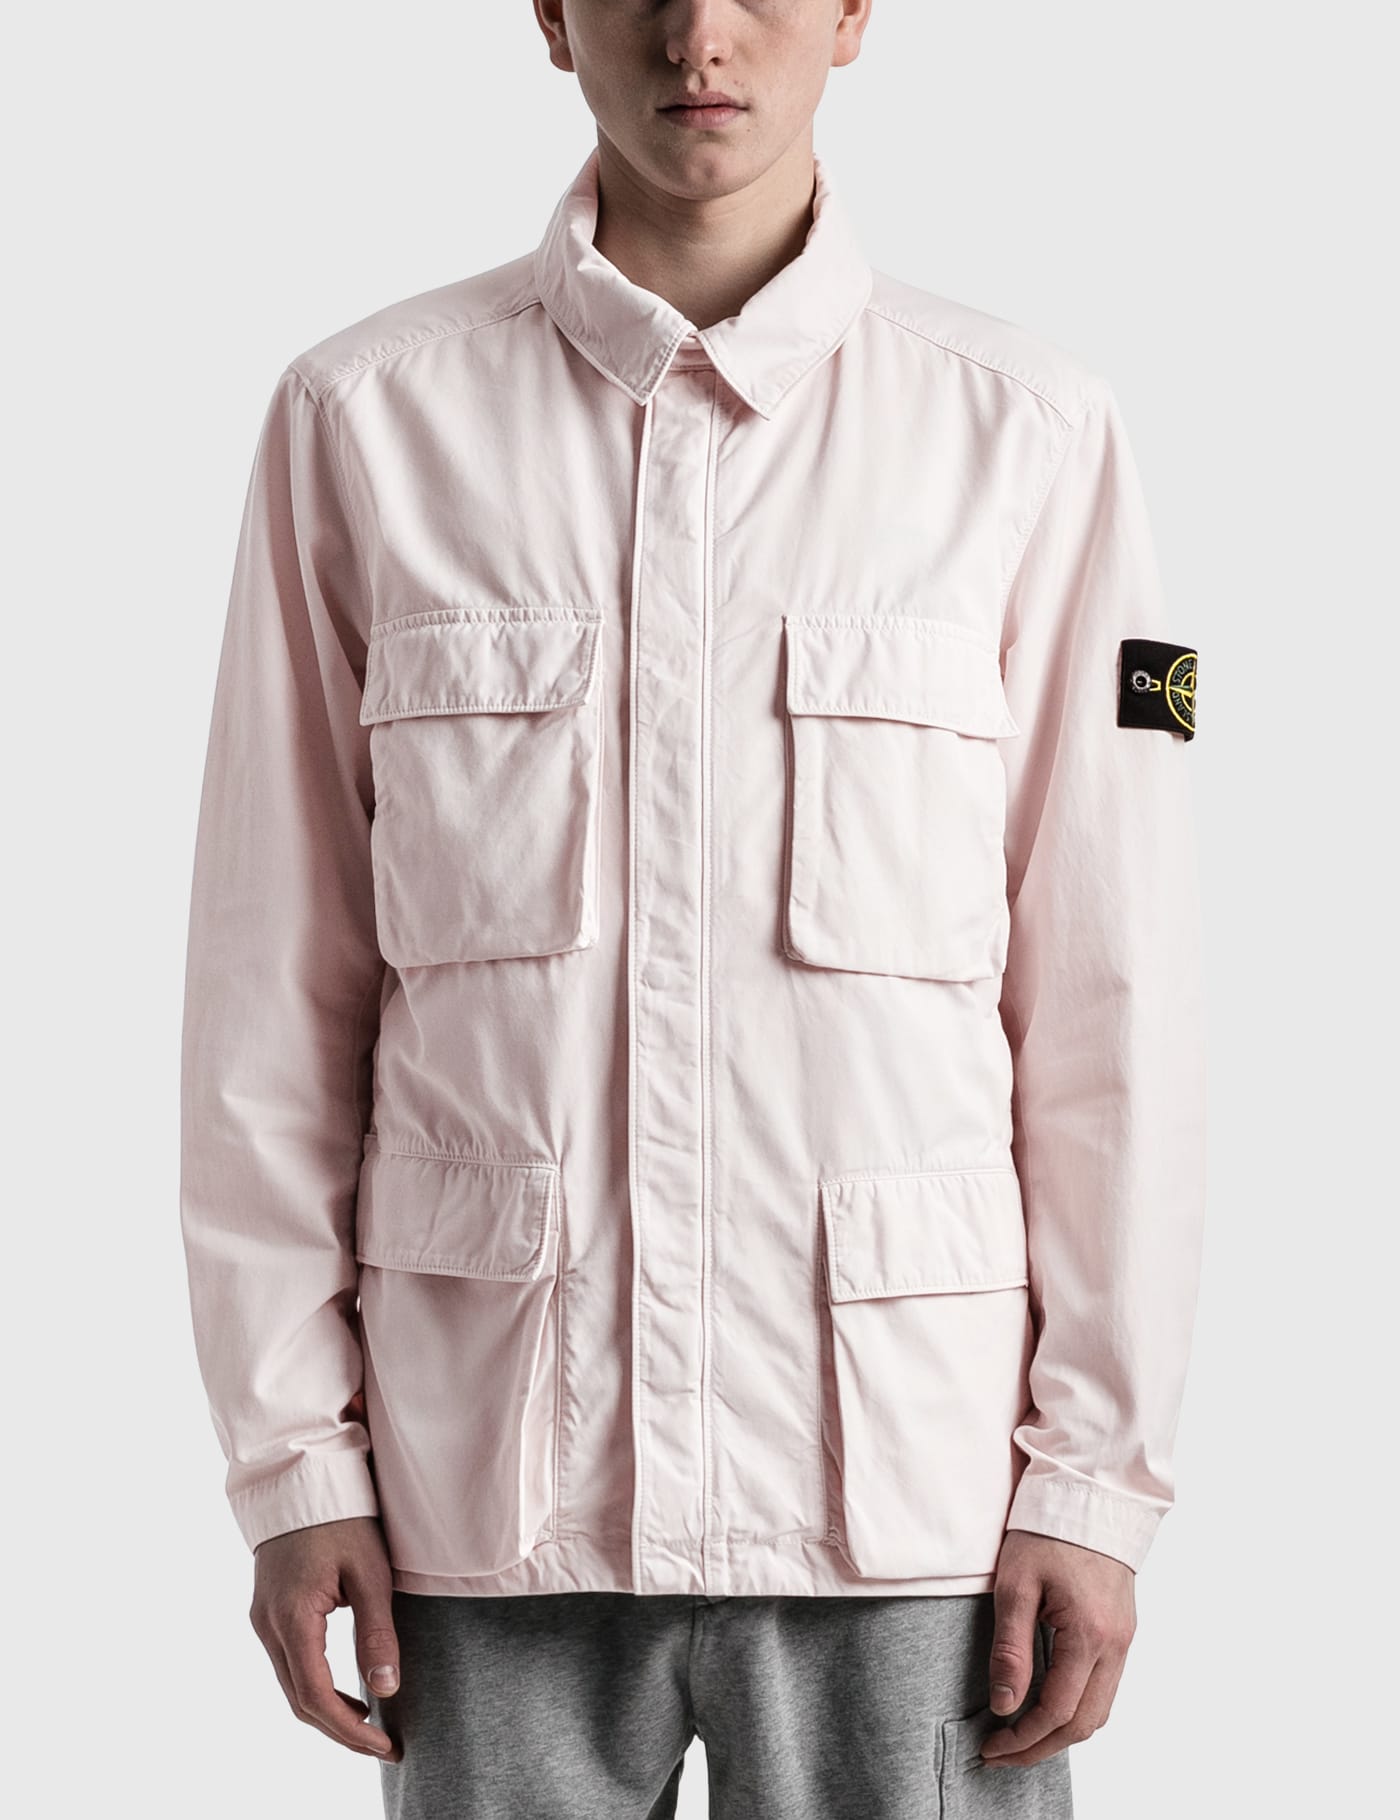 Stone Island - Garment-Dyed Nylon Cotton Batavia Field Jacket | HBX -  Globally Curated Fashion and Lifestyle by Hypebeast